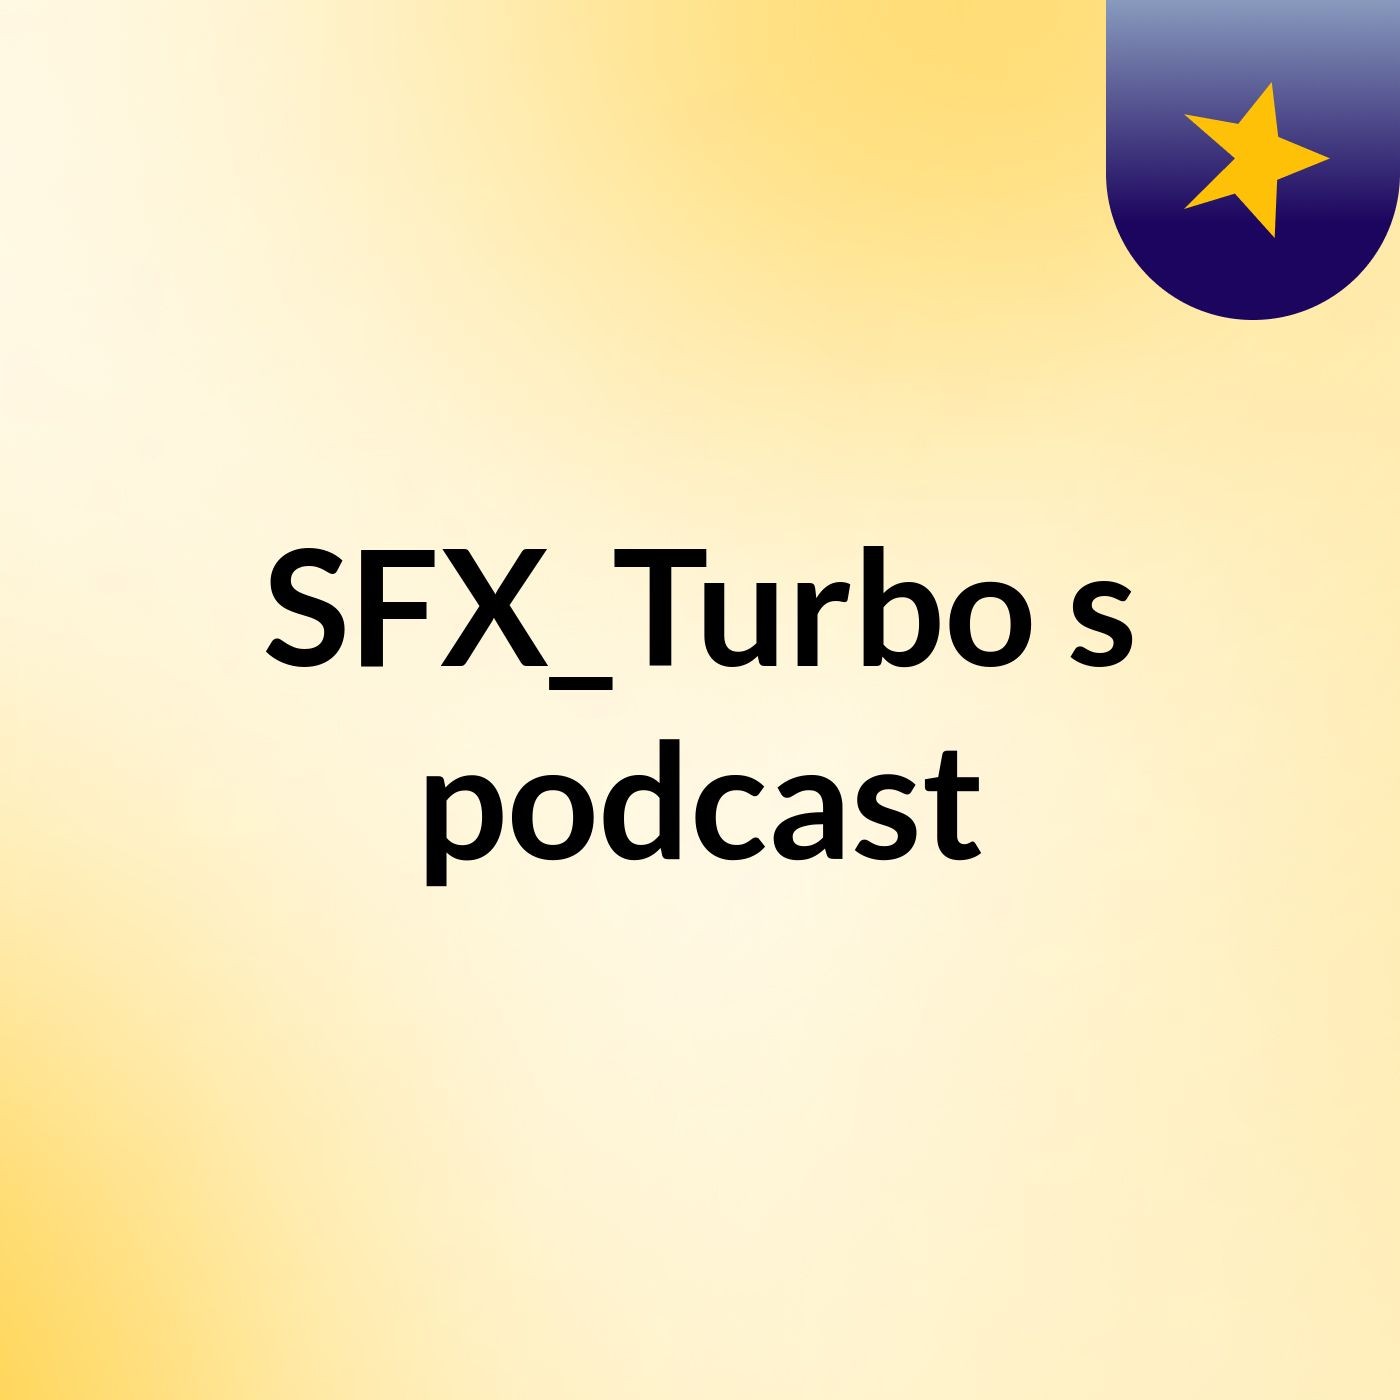 Episode 3 - SFX_Turbo's podcast